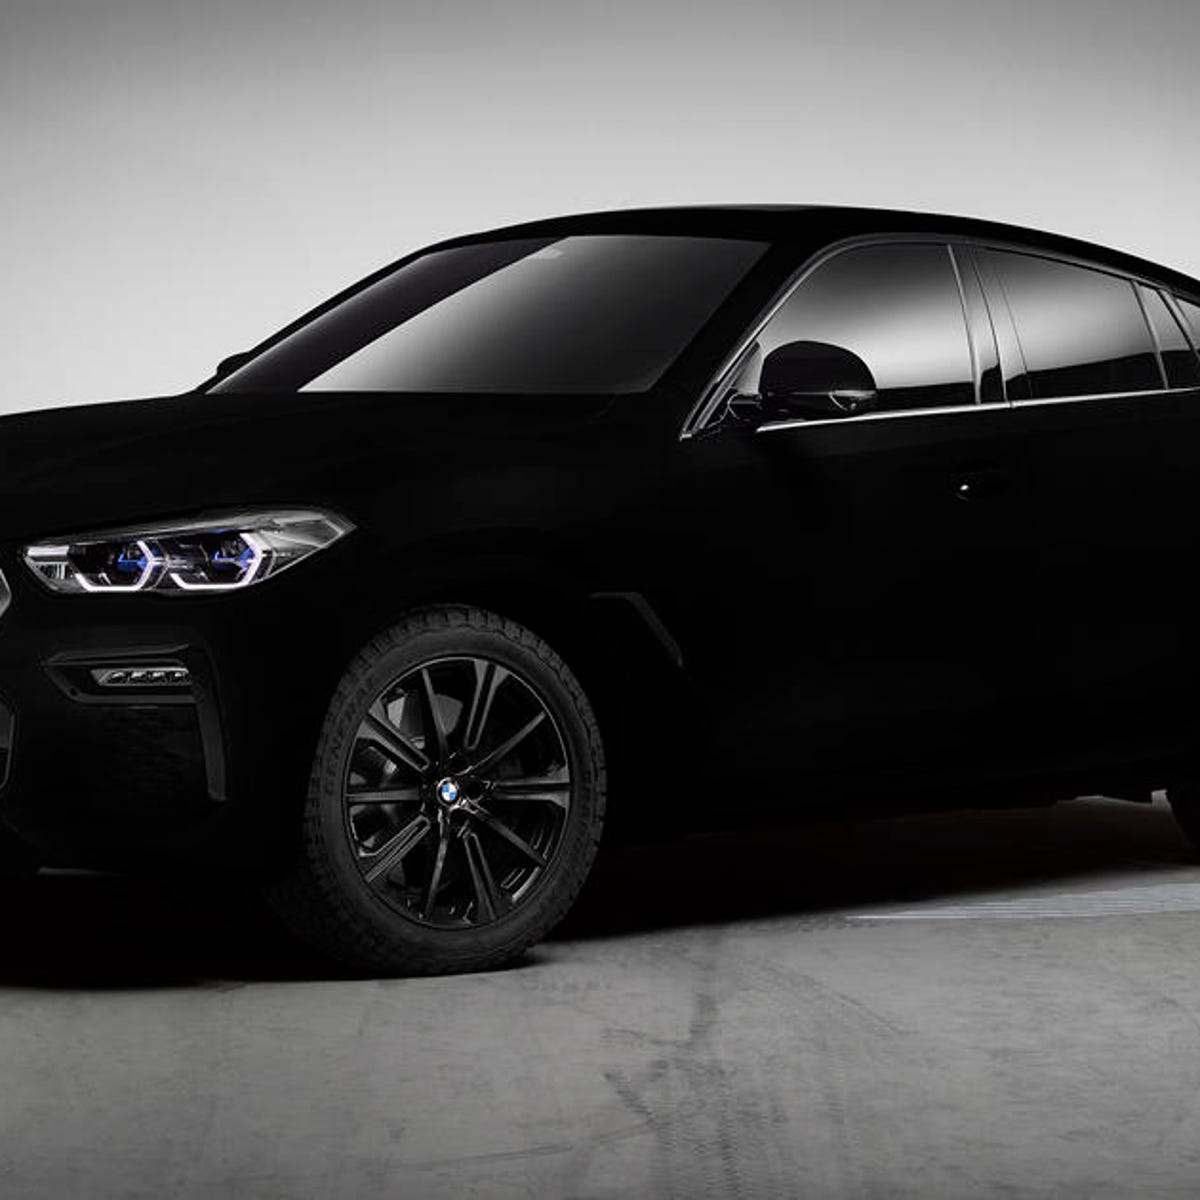 BMW painted a car with Vantablack, the world's blackest black